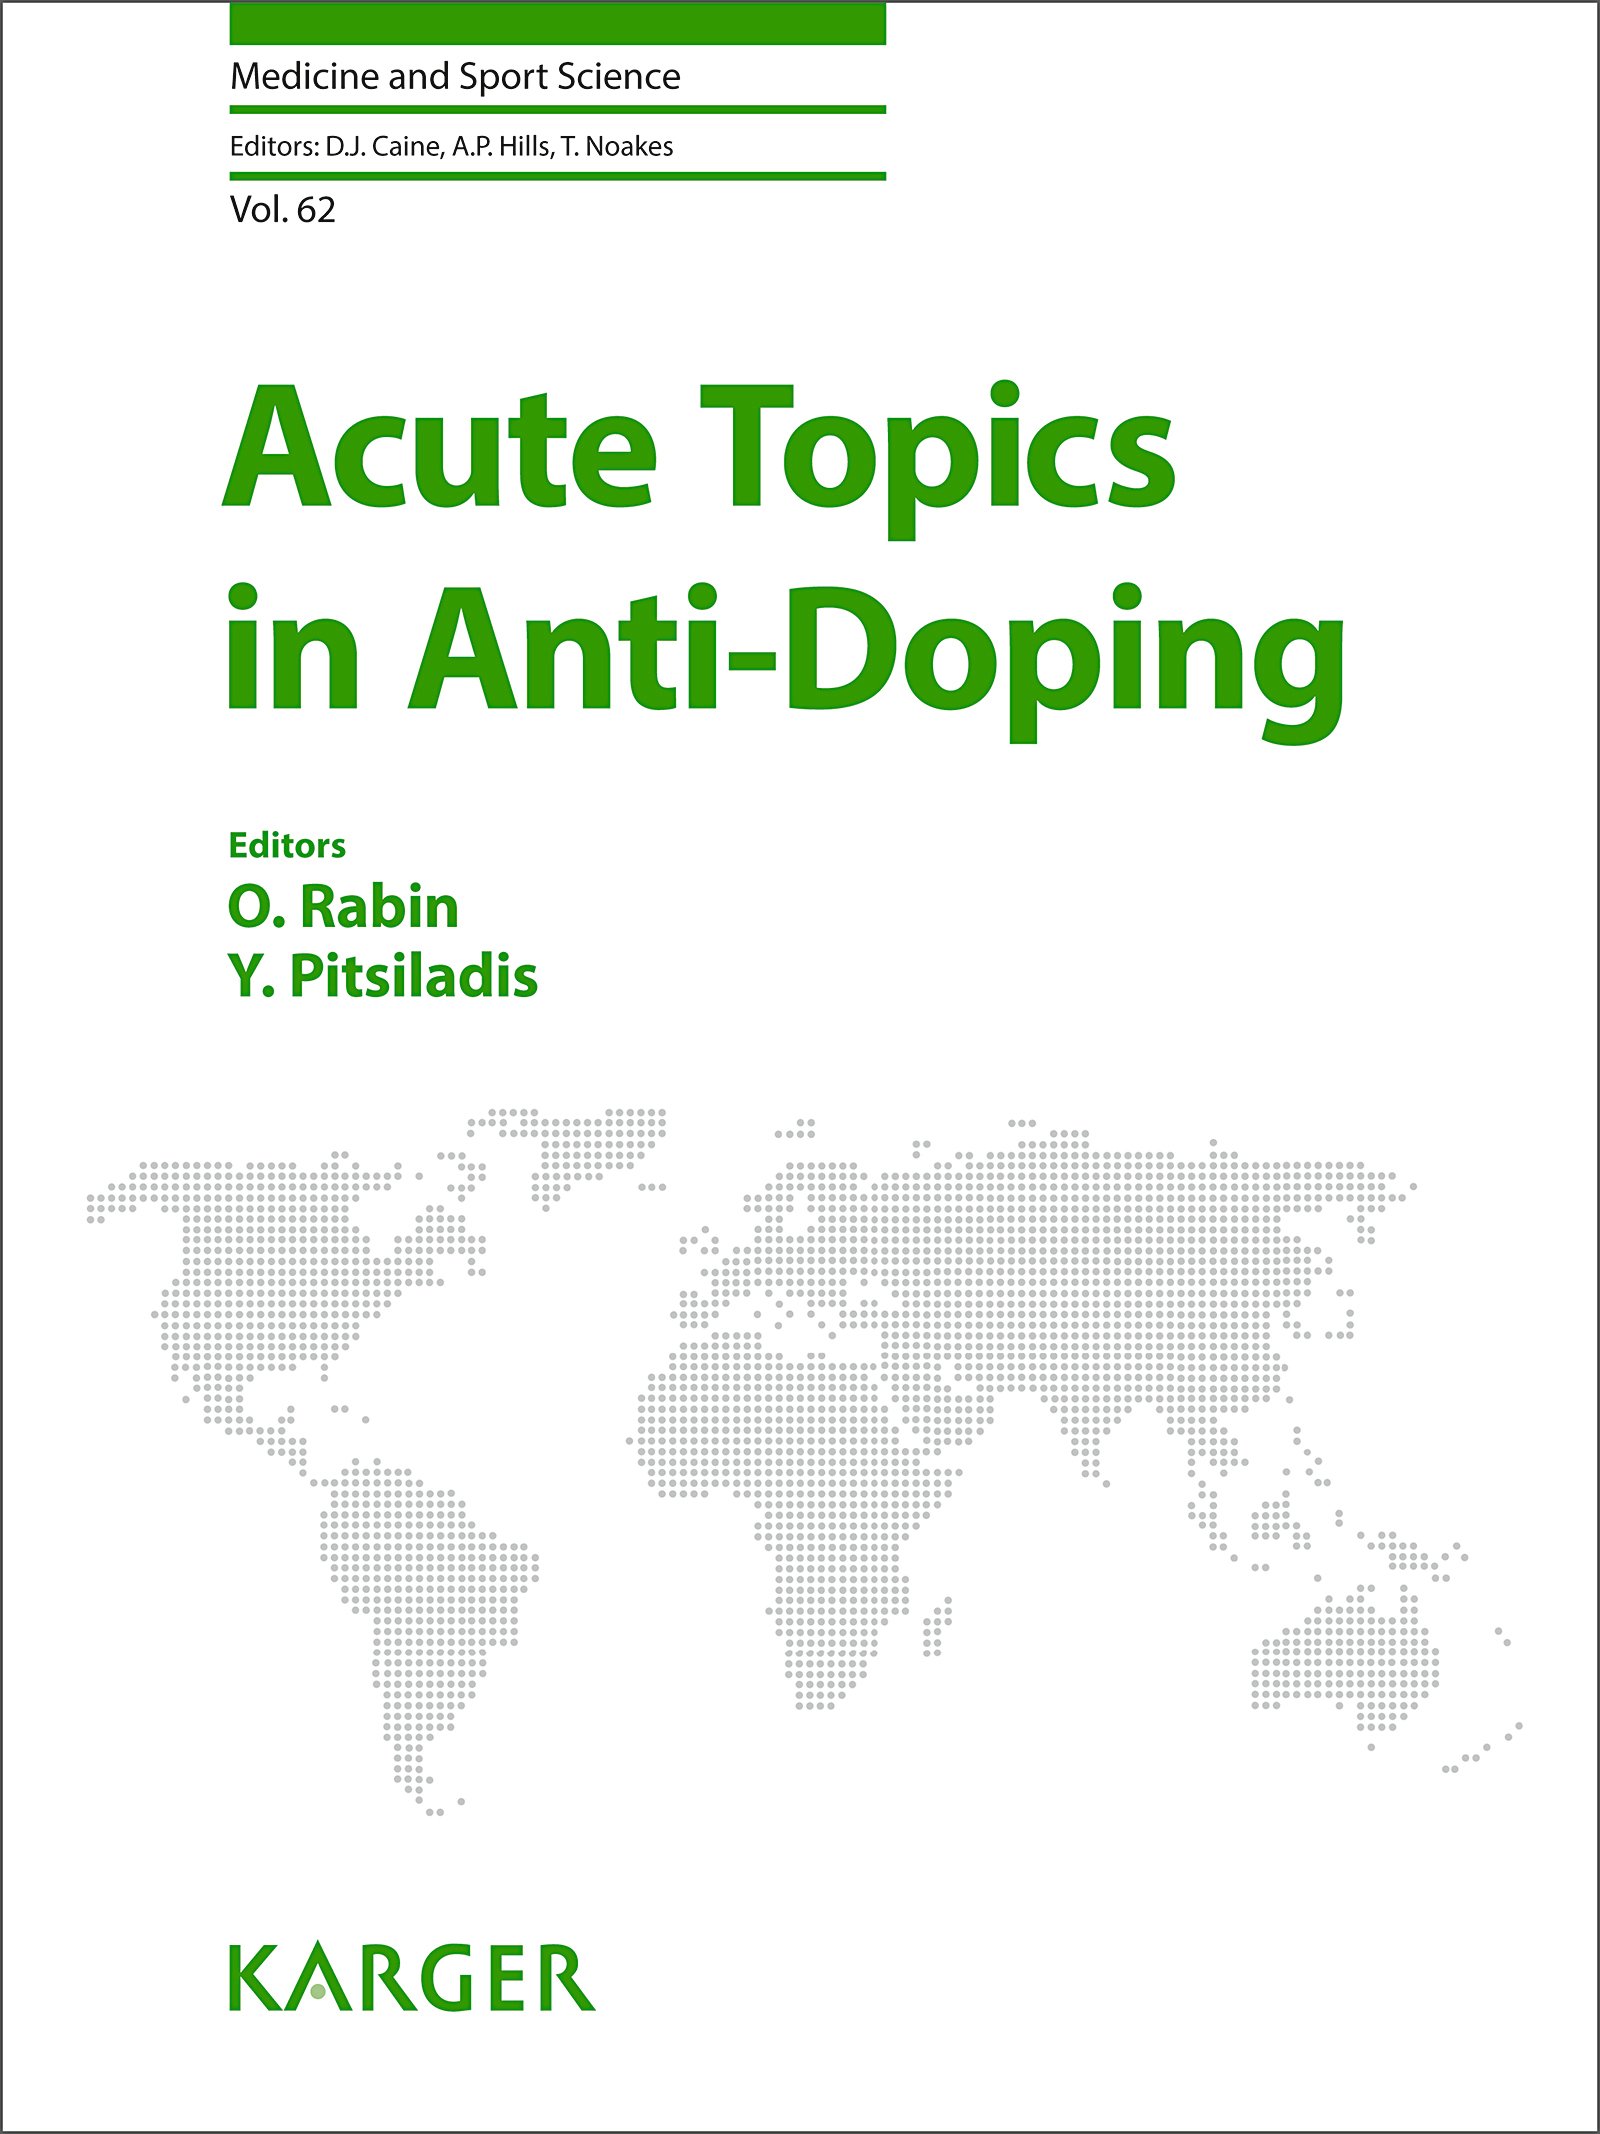 Acute Topics in Anti-Doping